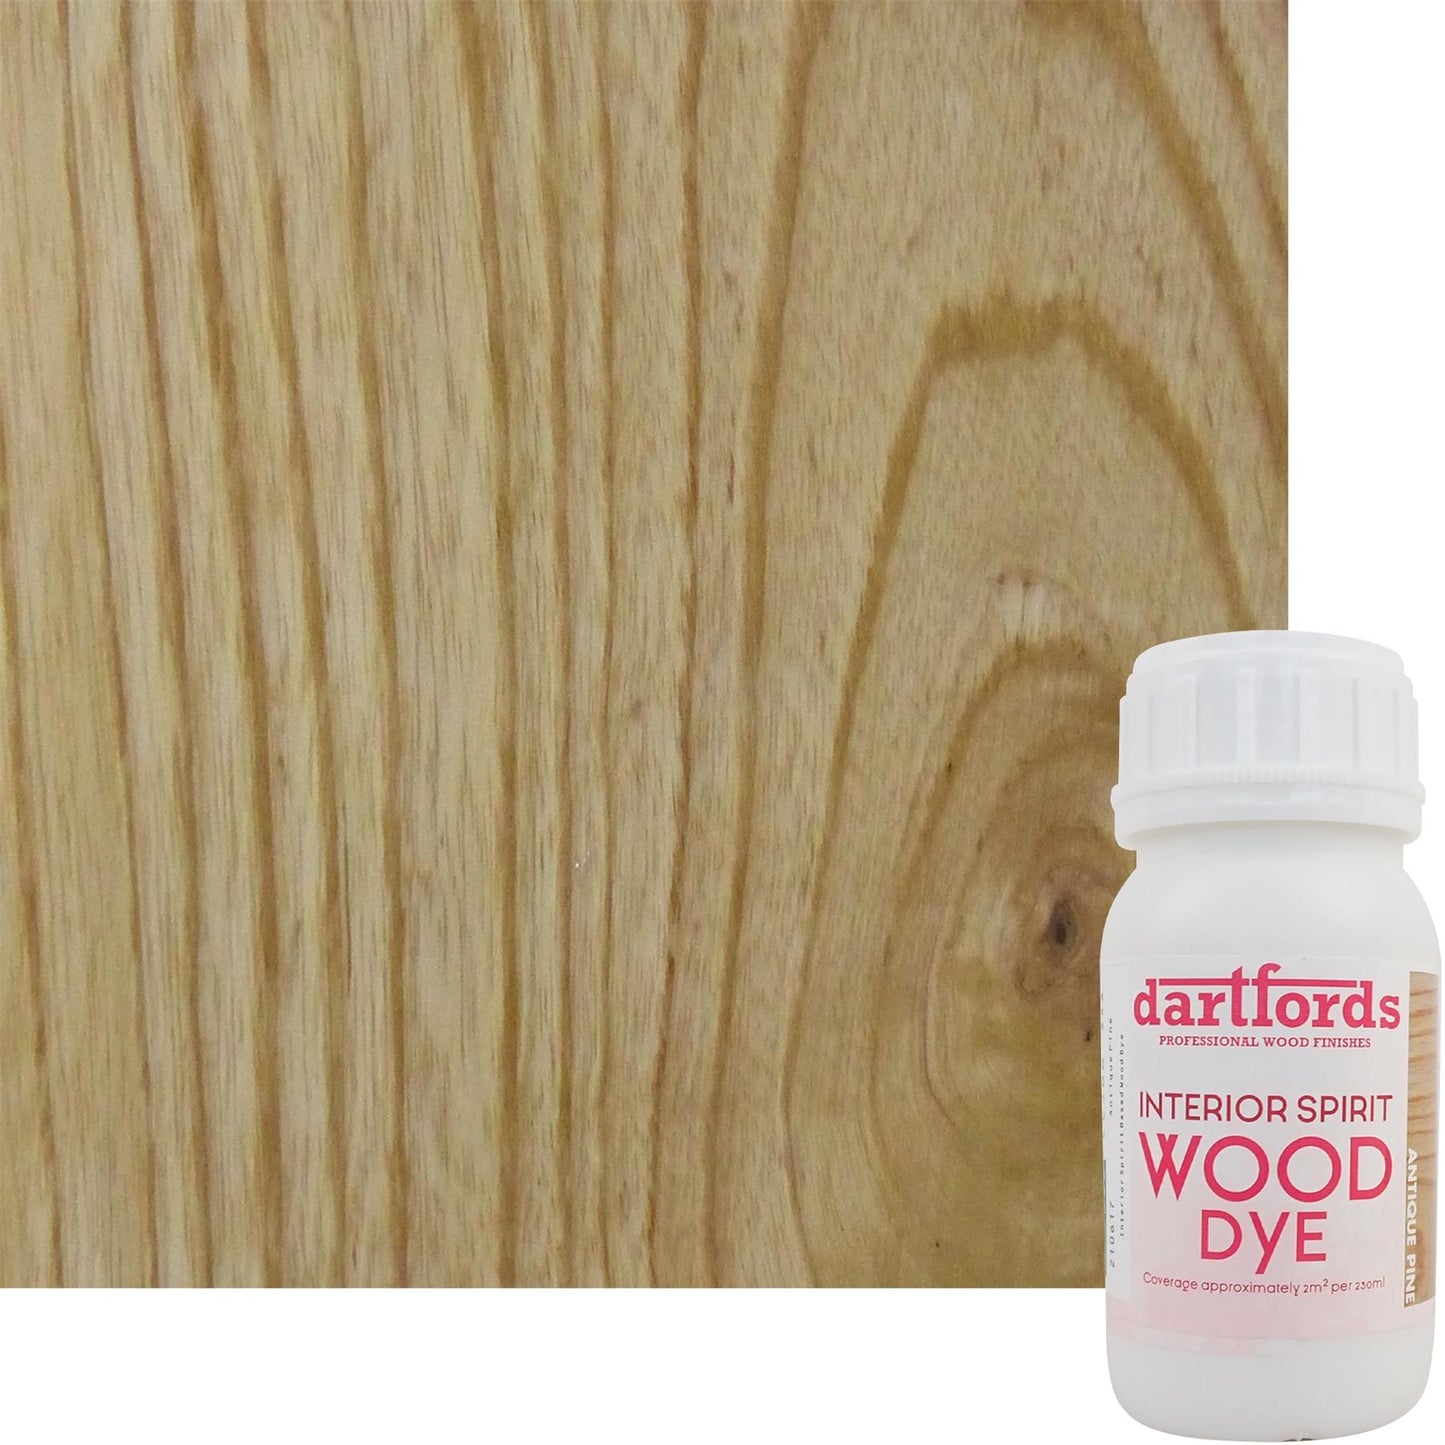 dartfords Antique Pine Interior Spirit Based Wood Dye - 230ml Tin